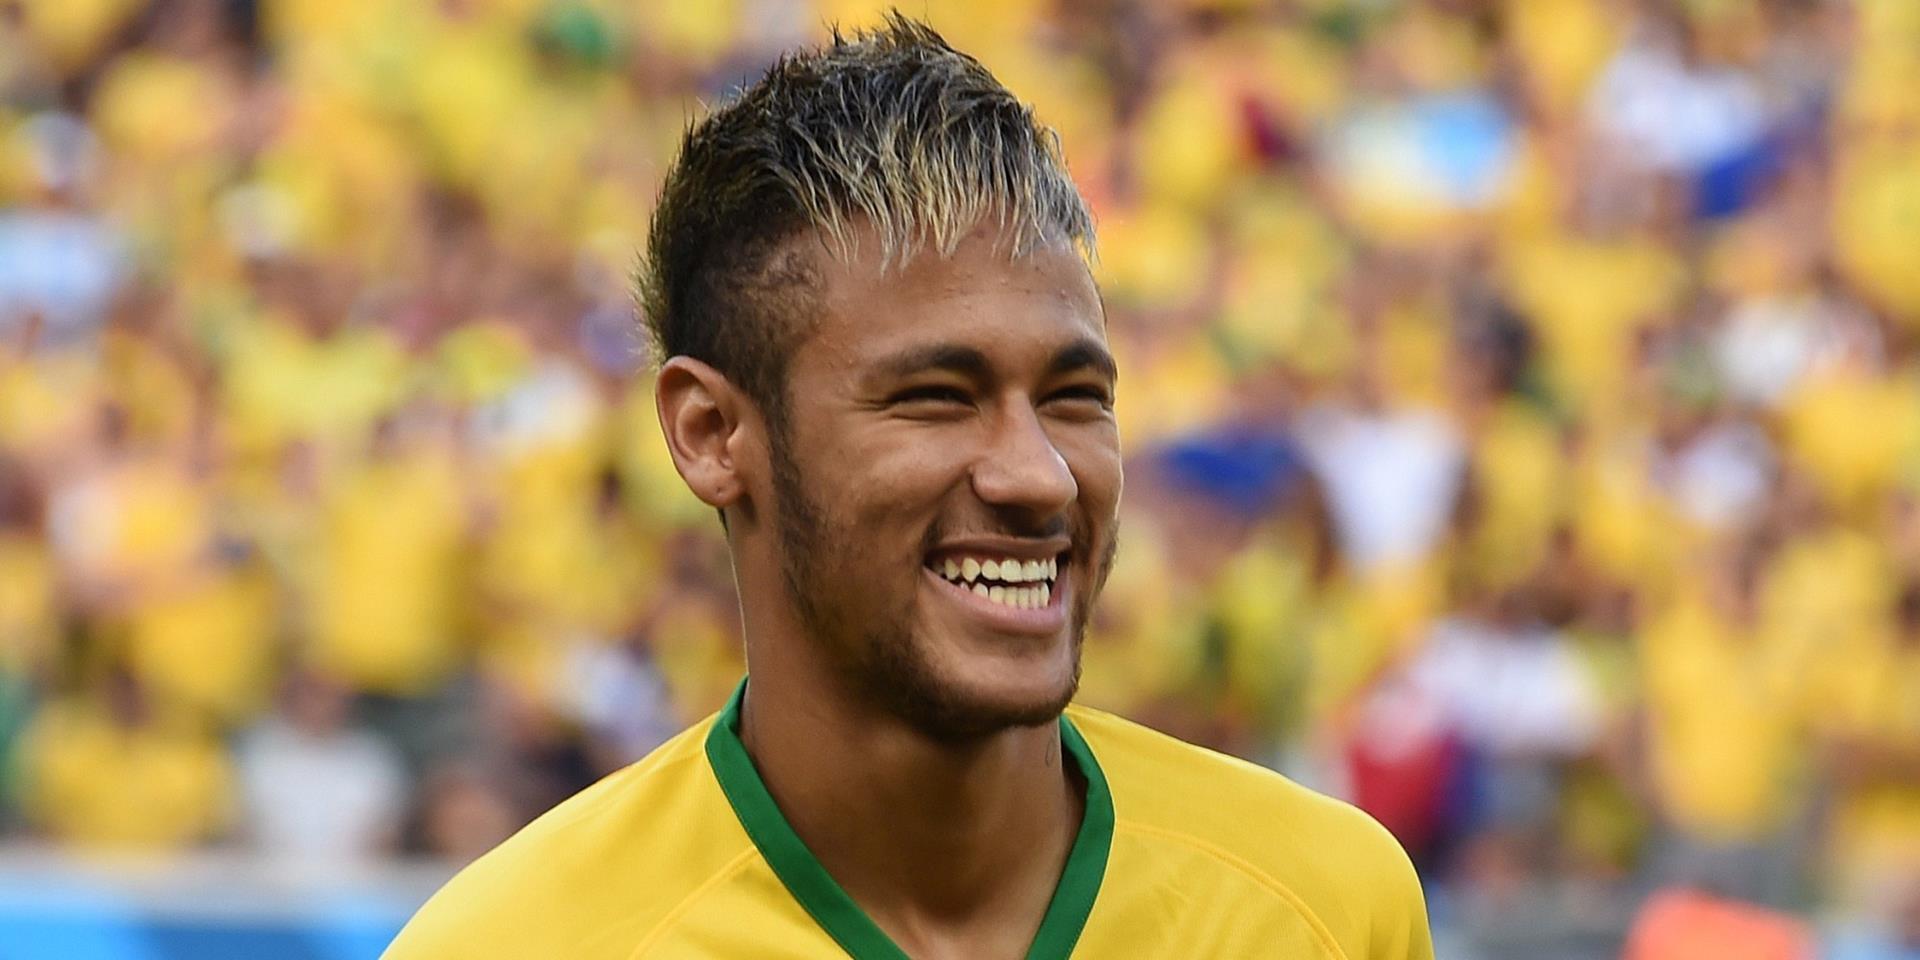 Do You Like Neymar? 